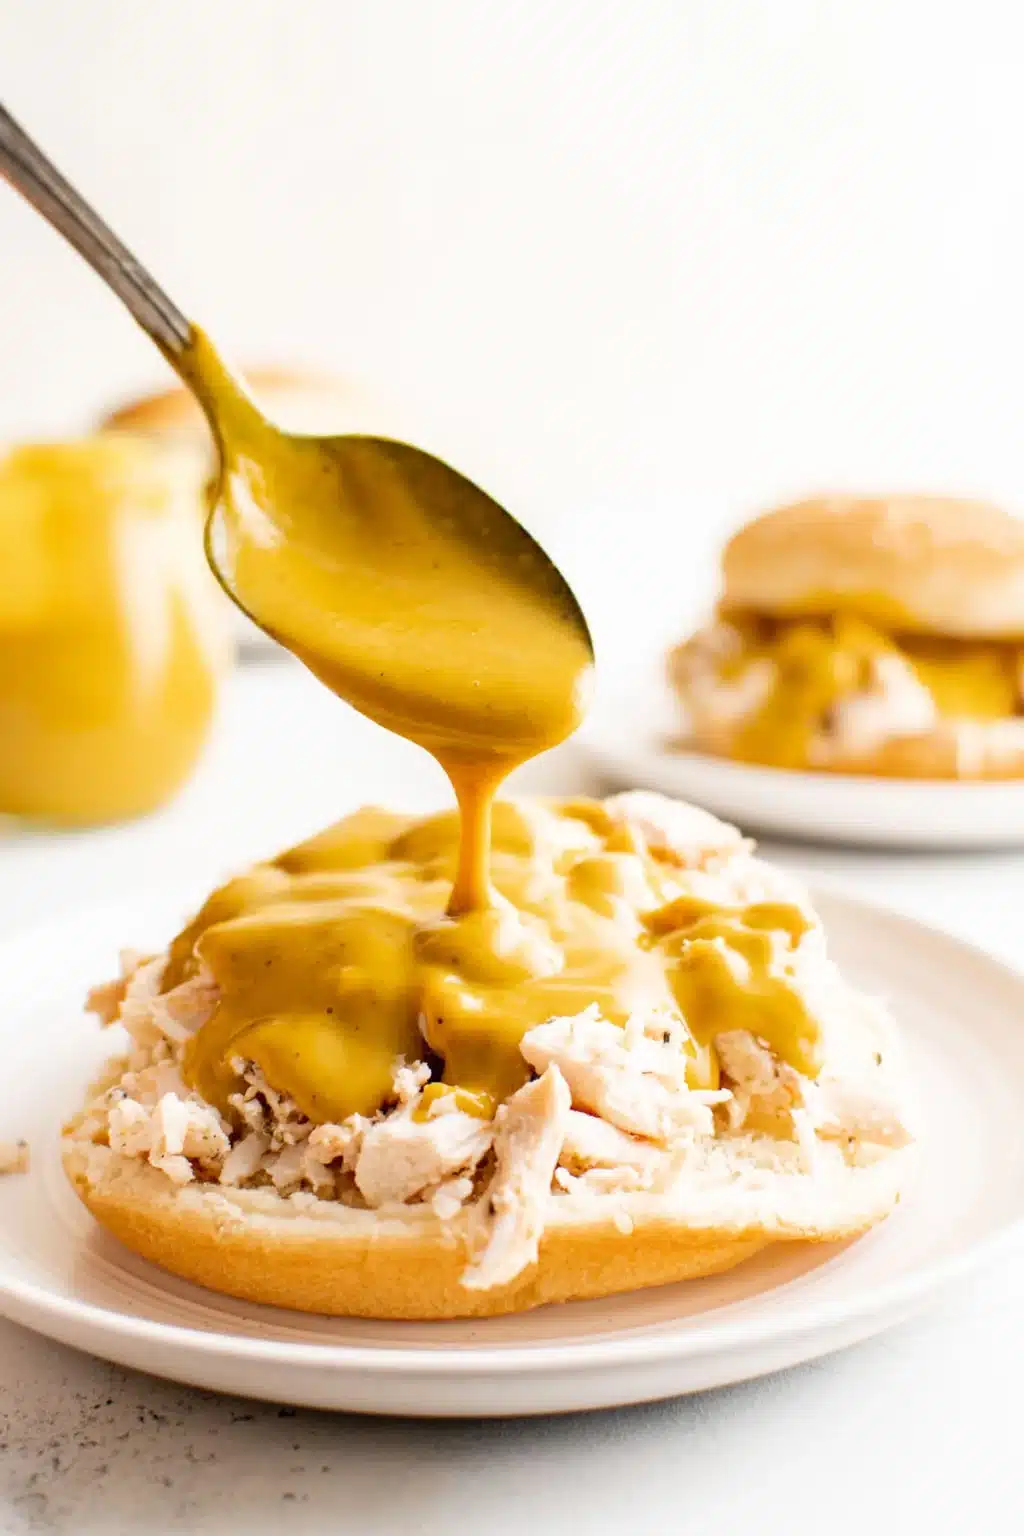 Spoon drizzling Carolina gold bbq sauce on chicken sandwich.